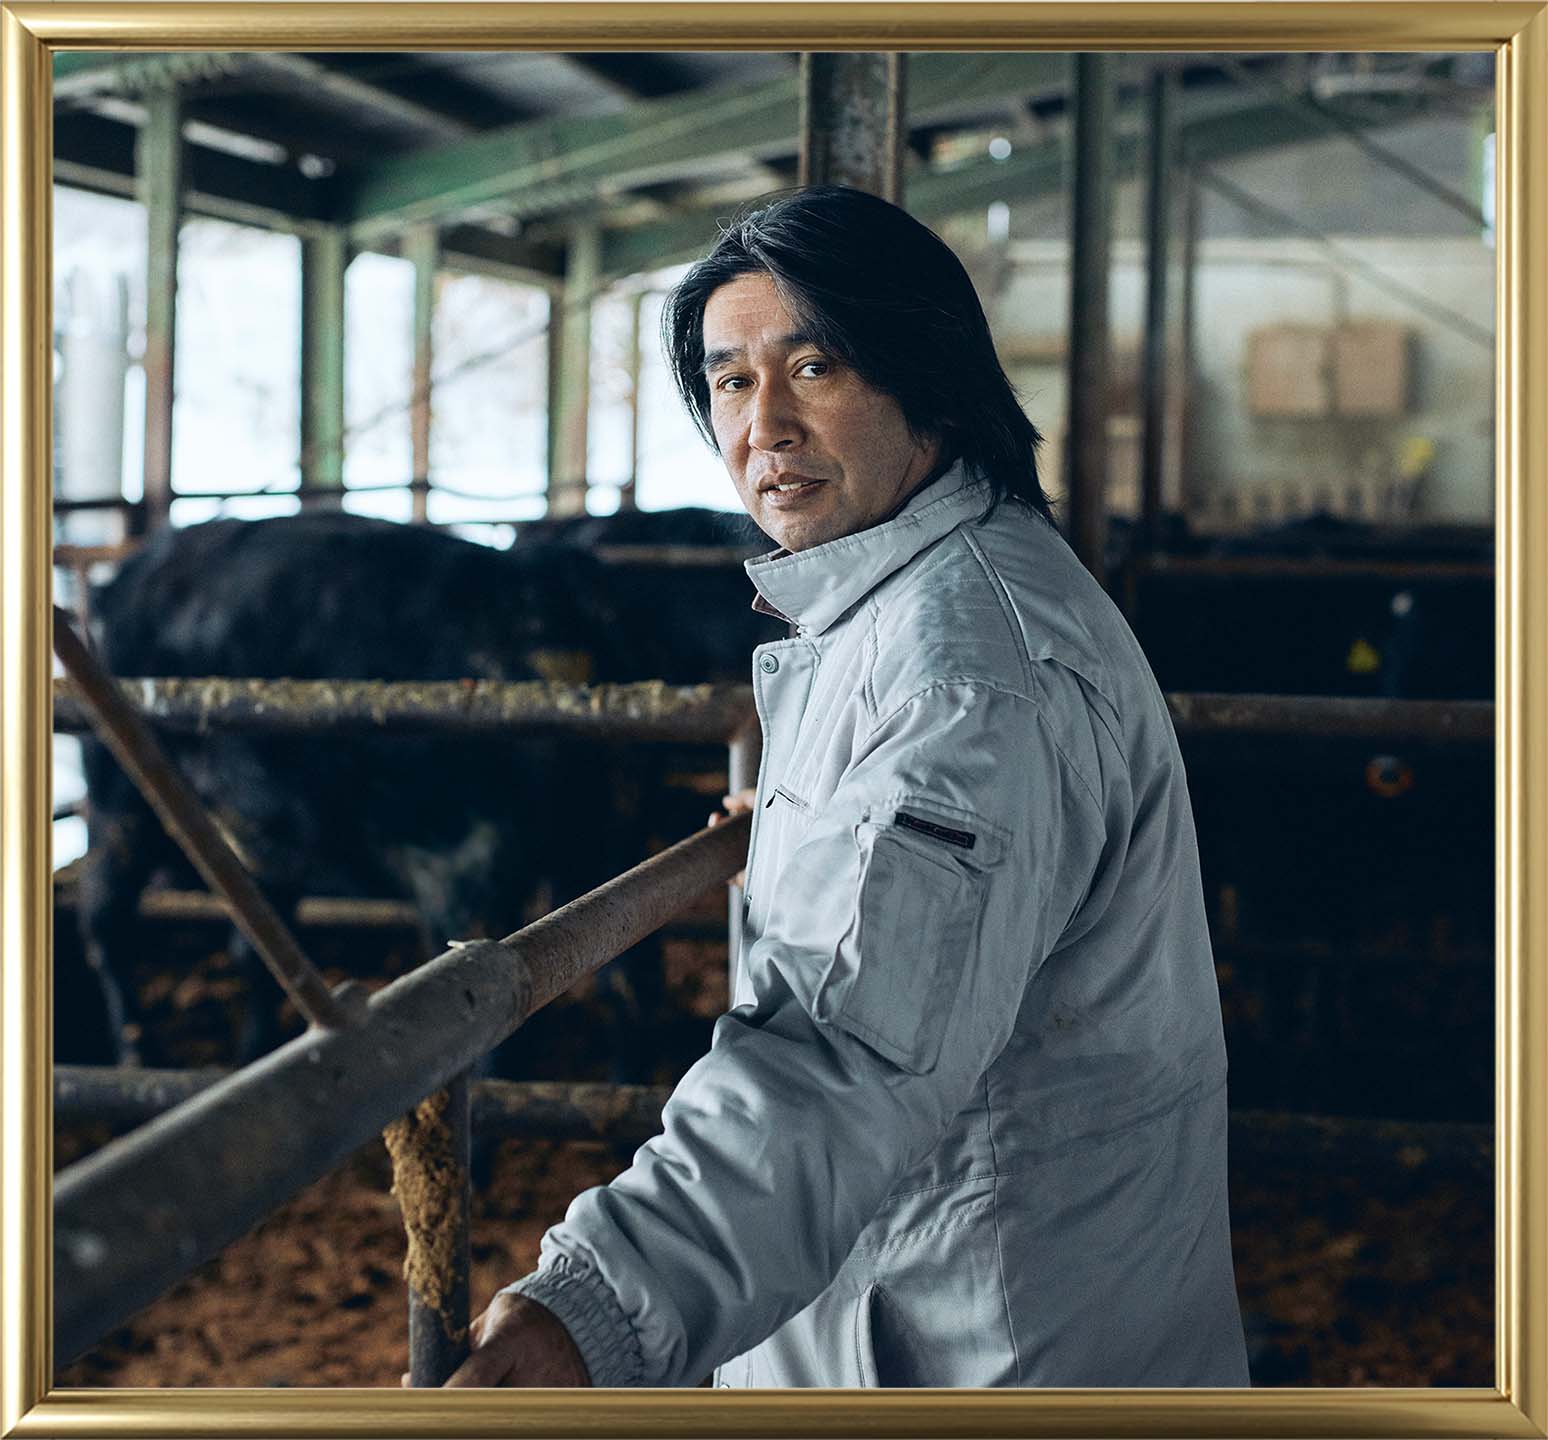 From the Japanese Wagyu Beef Production Area Ogni singolo capo è allevato con cura